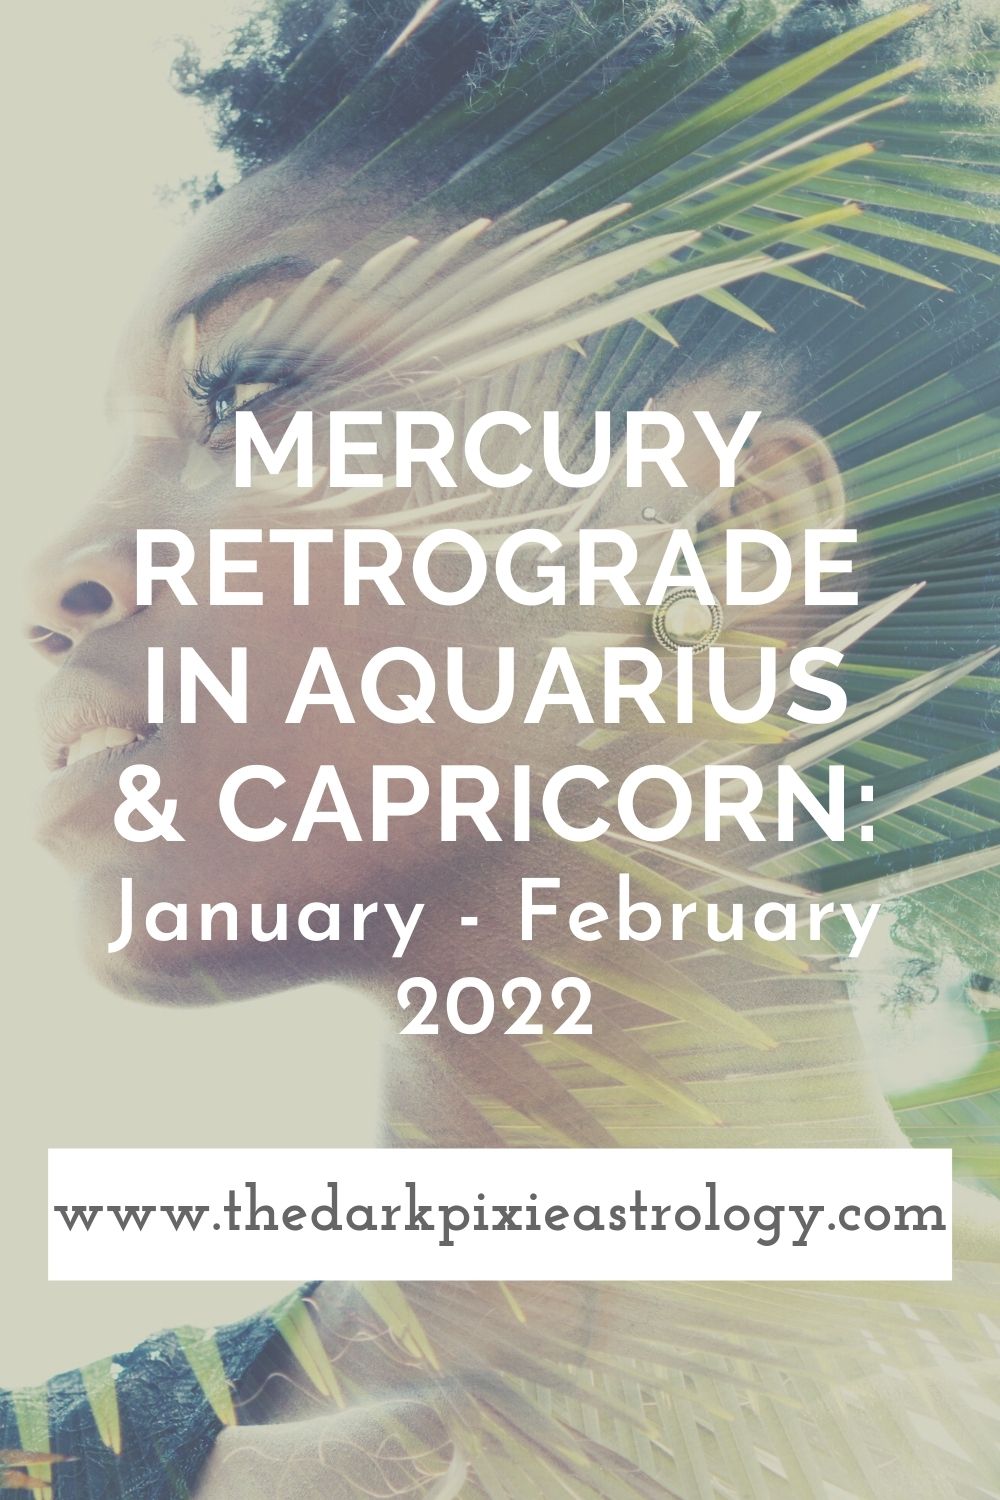 Mercury Retrograde in Aquarius & Capricorn: January - February 2022 - The Dark Pixie Astrology